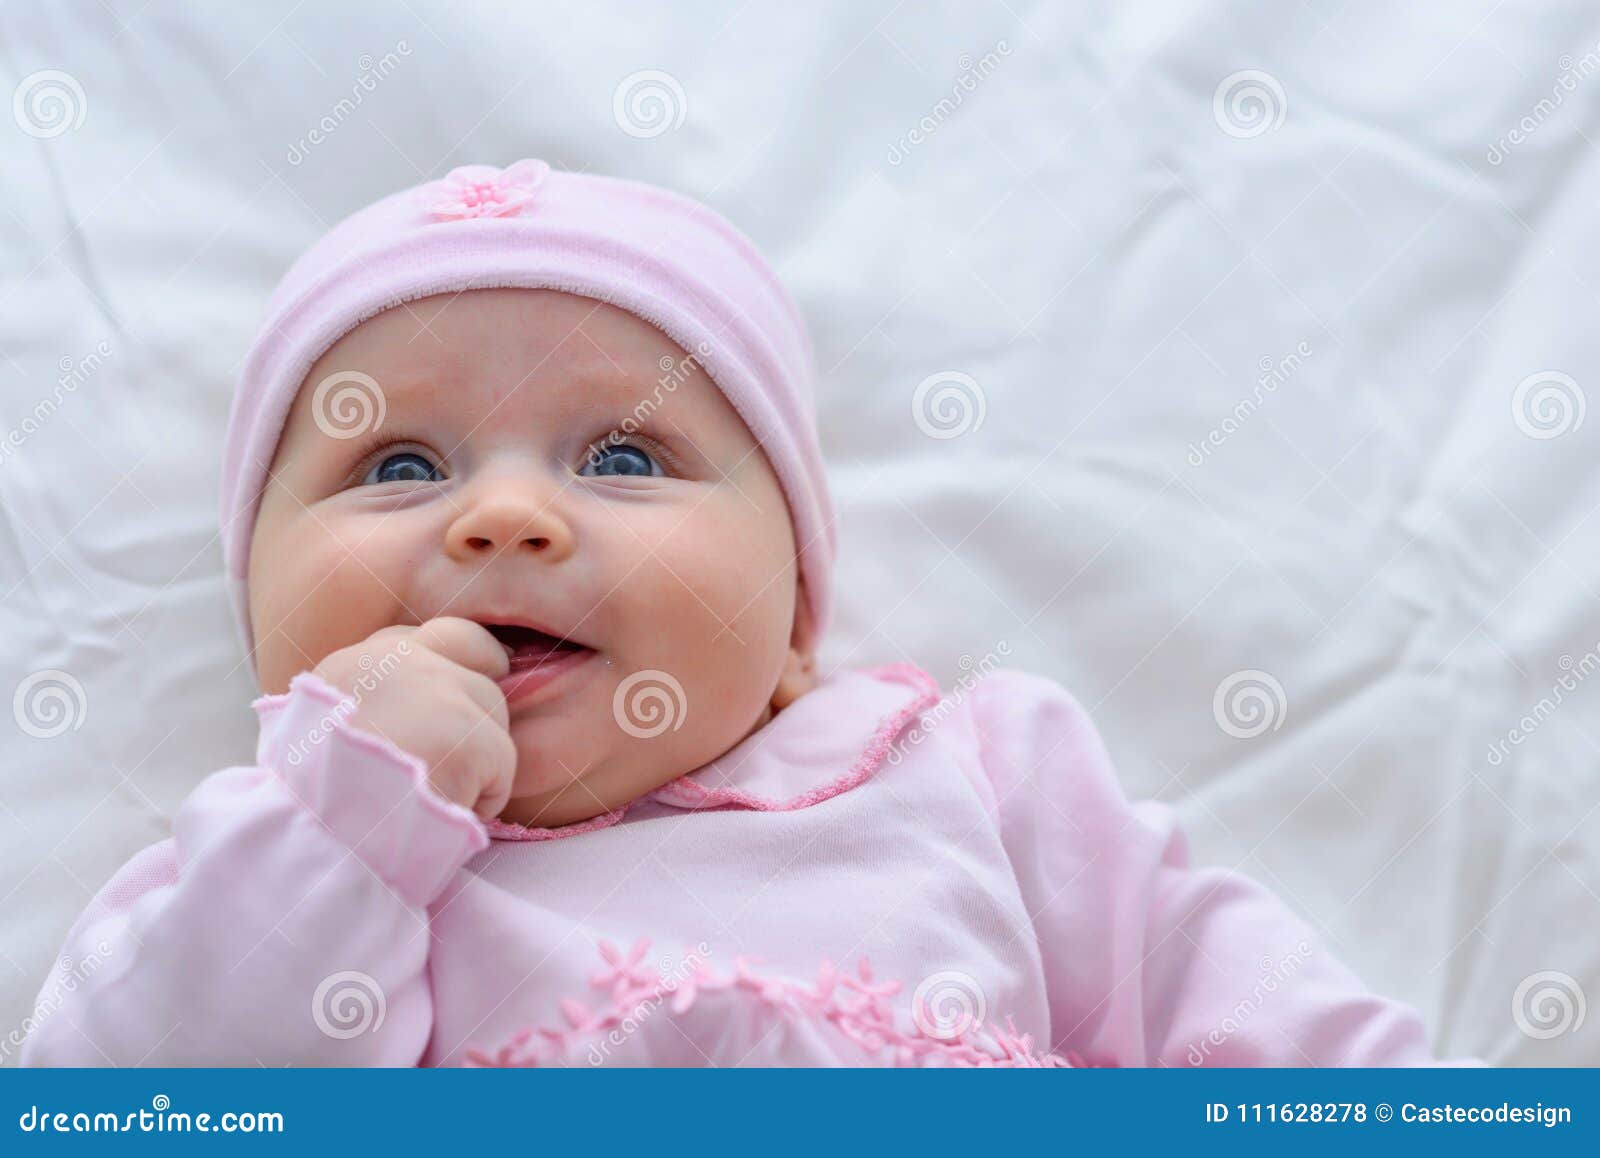 Cute Baby Girl Portrait. Sweet Little Girl All Dressed in Pink ...